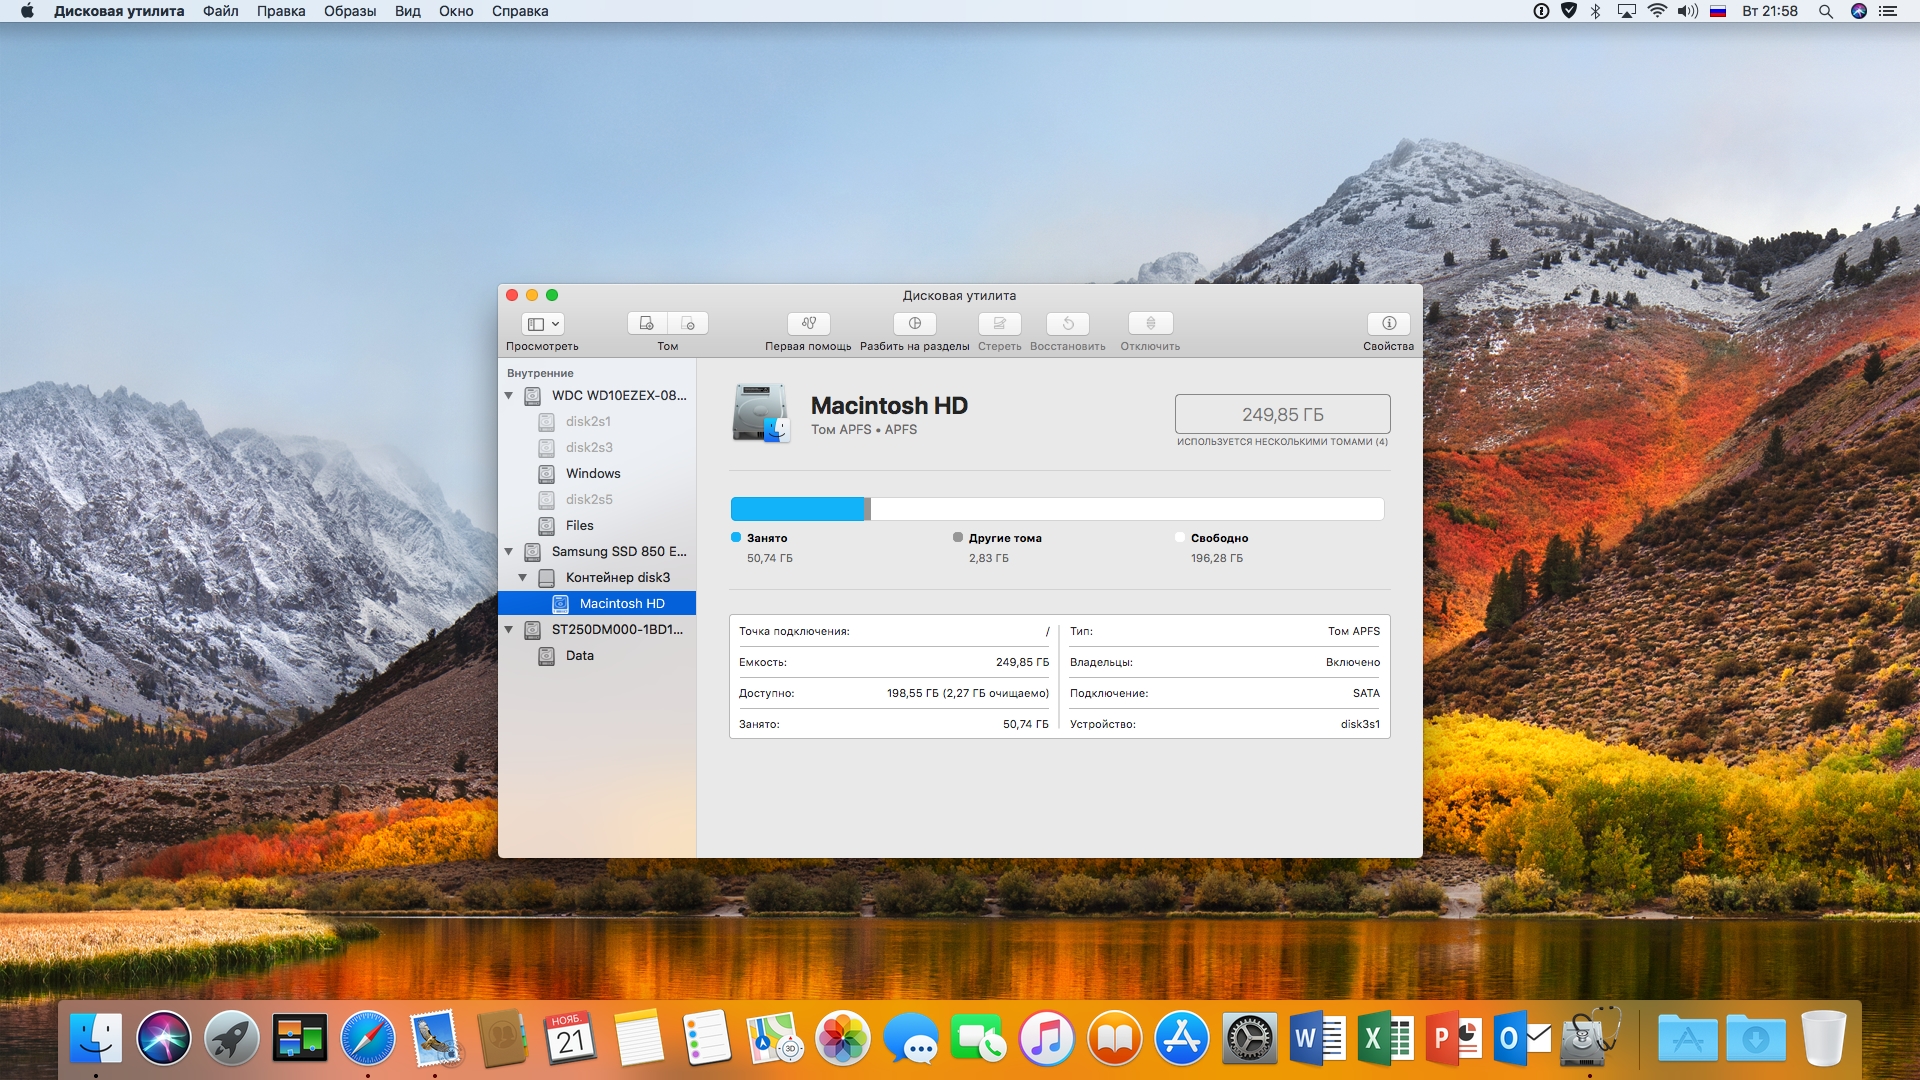 download onyx for mac os sierra version 10.12.6